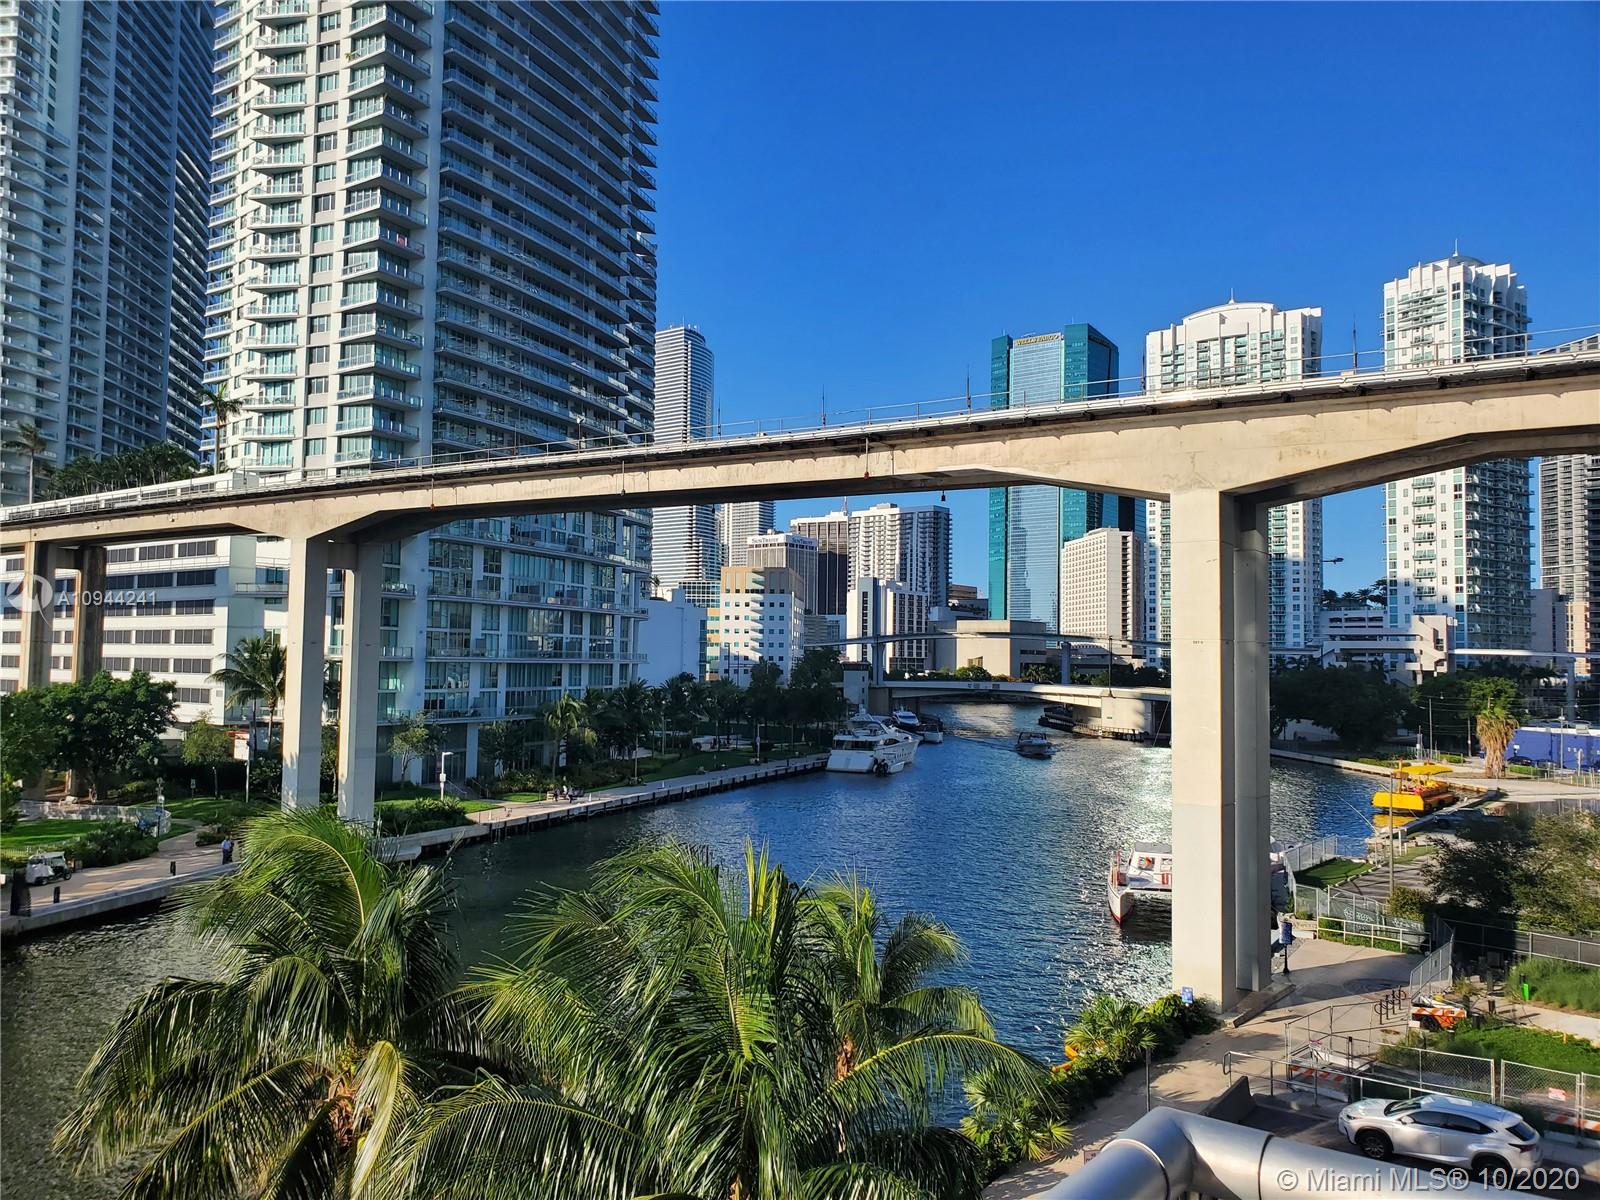 Direct View of the Miami River